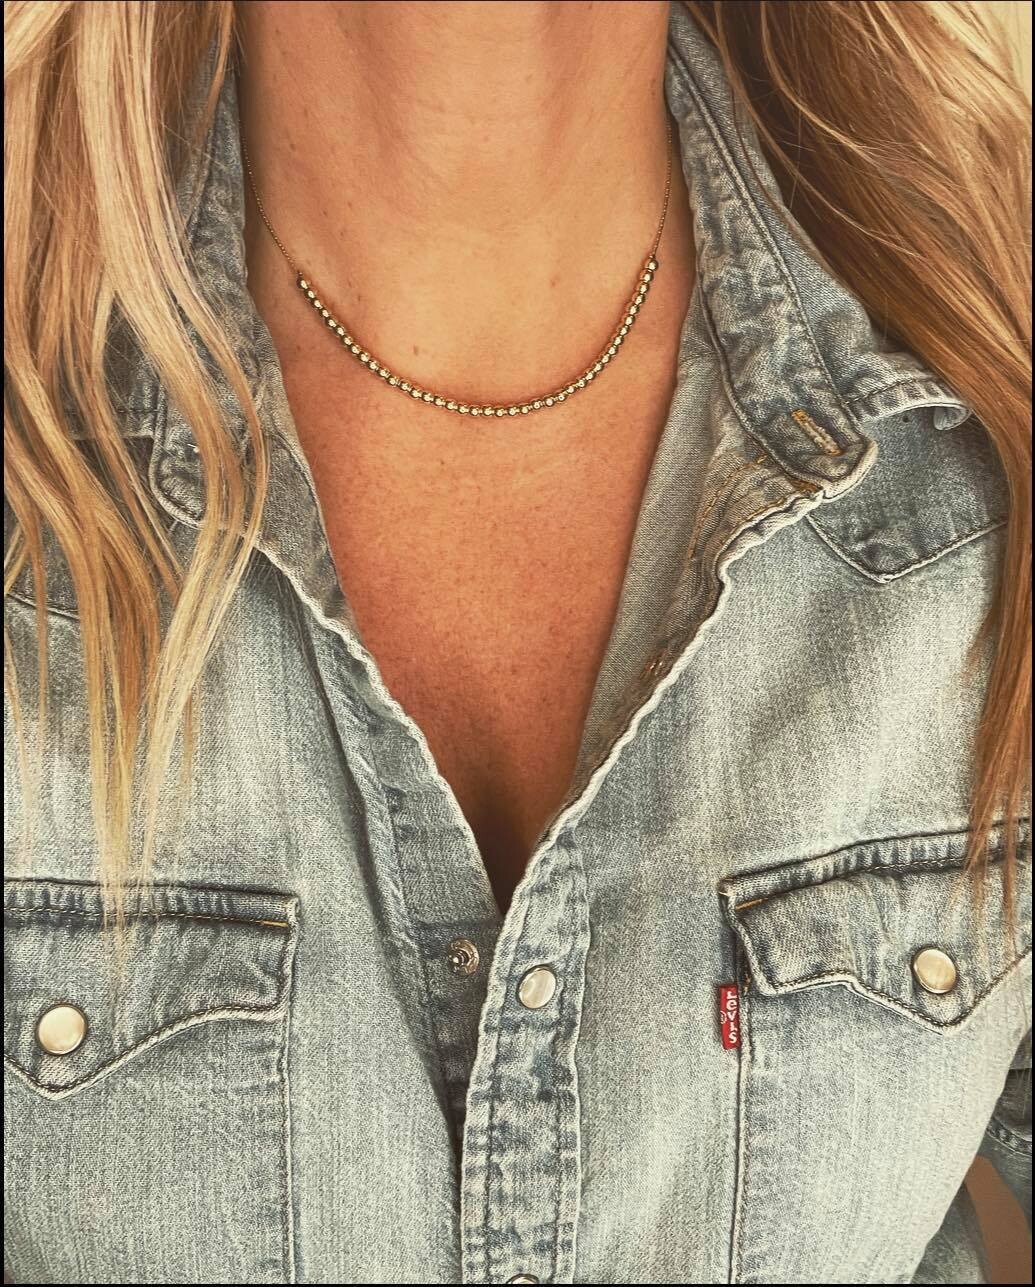 the Amelia necklace